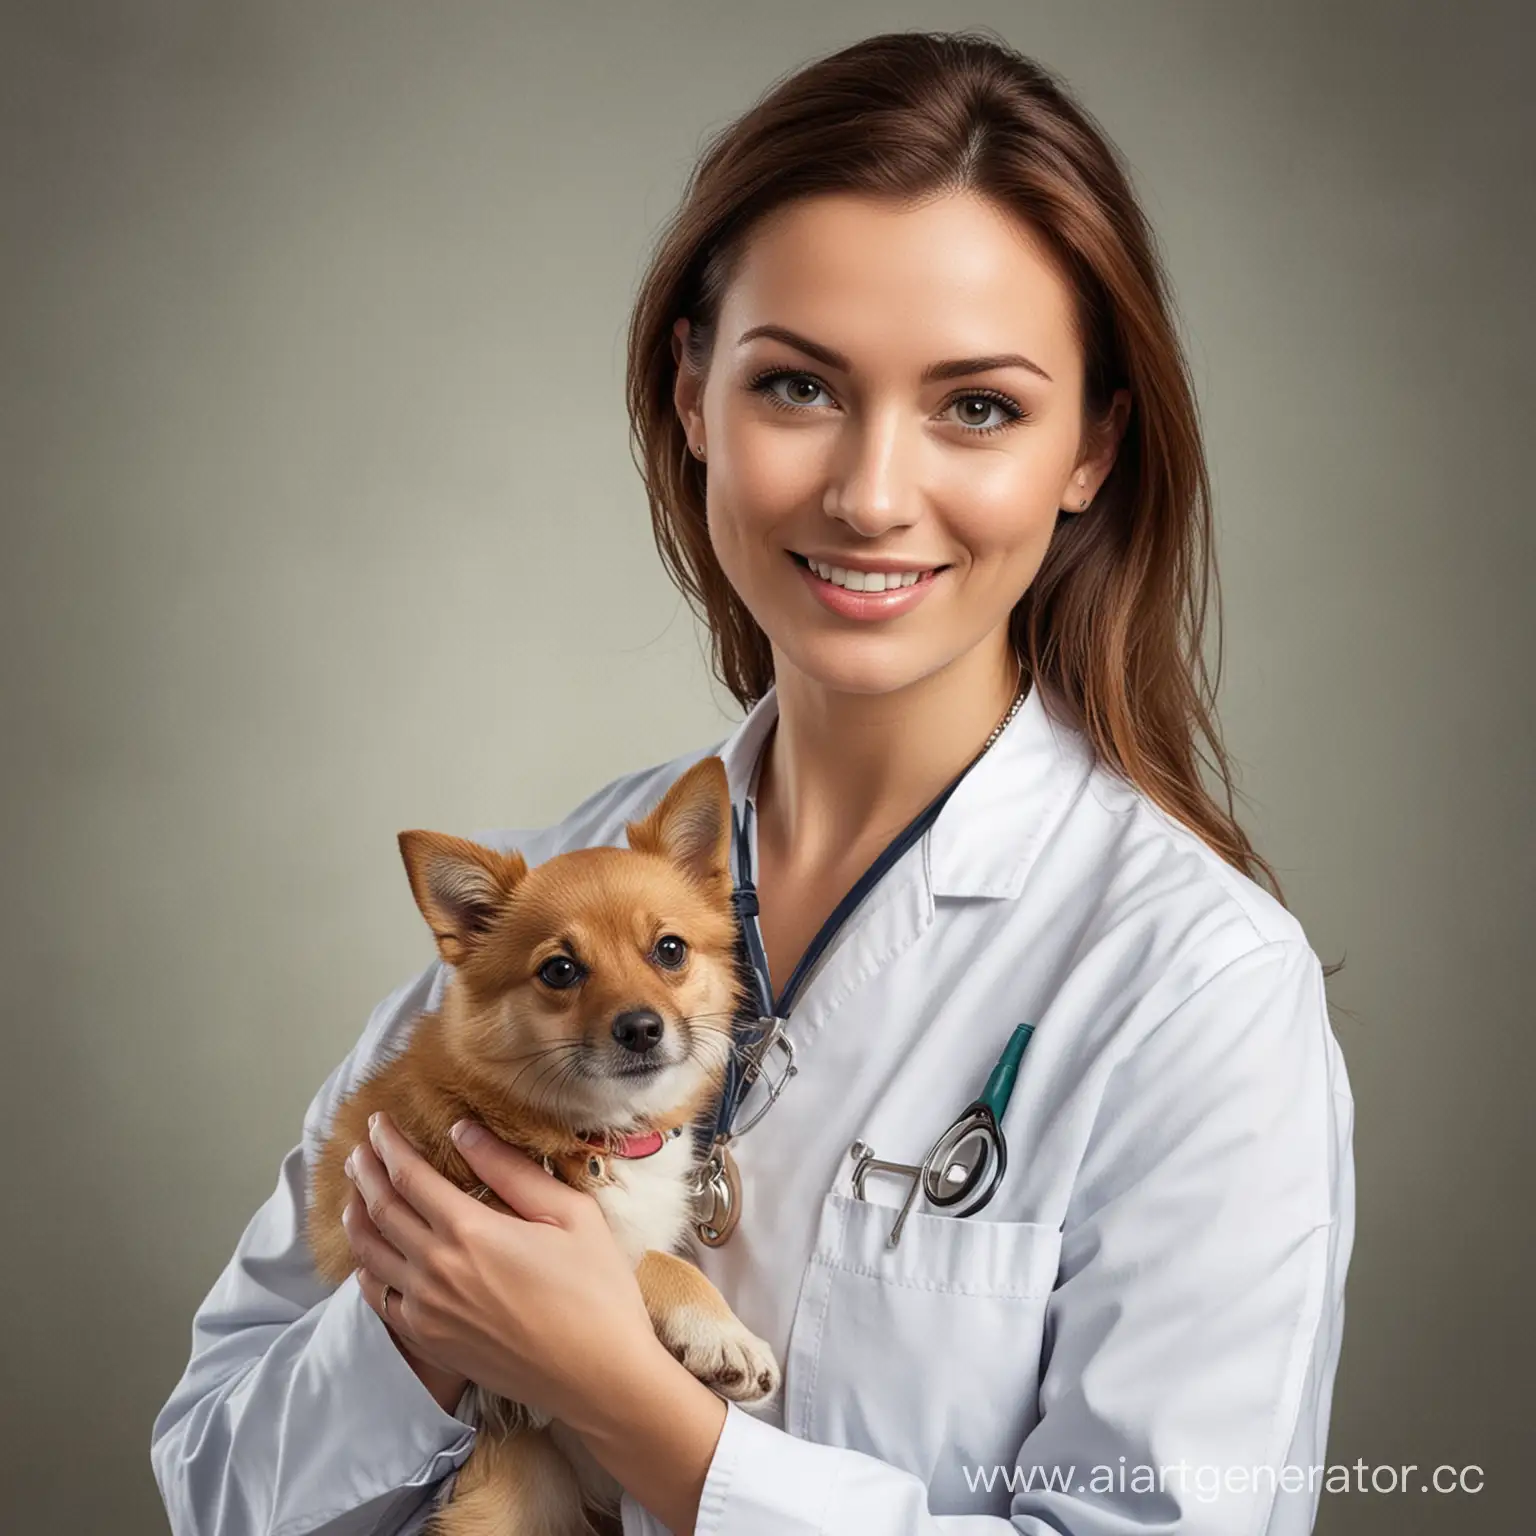 Caring-Veterinarian-Examining-a-Beloved-Pet